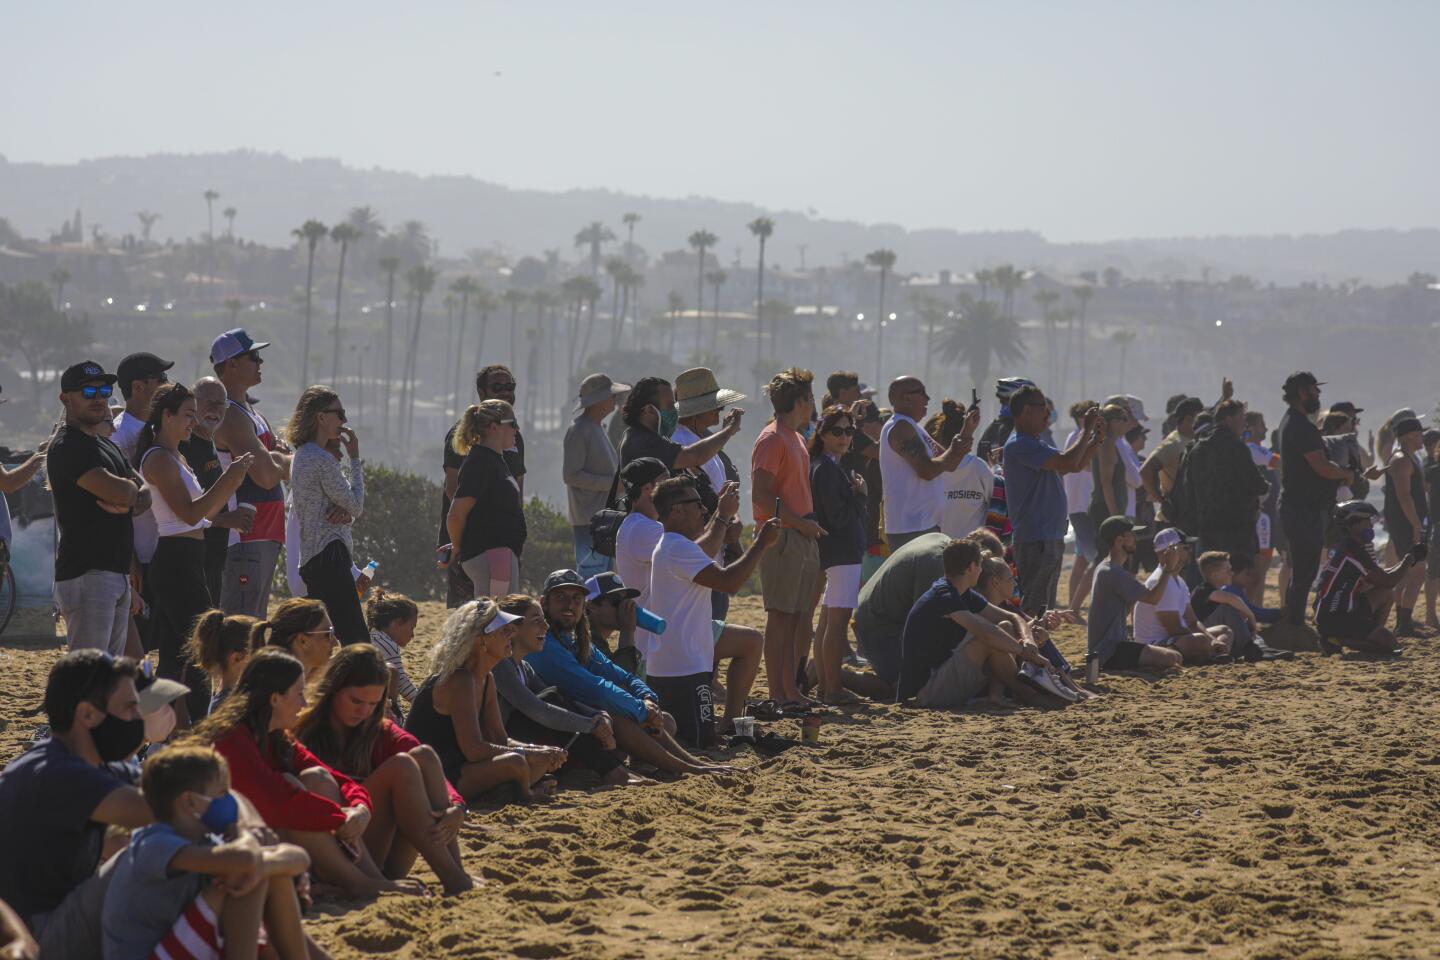 Spectators along the Wedge in Newport Beach, a surf spot, on July 4.